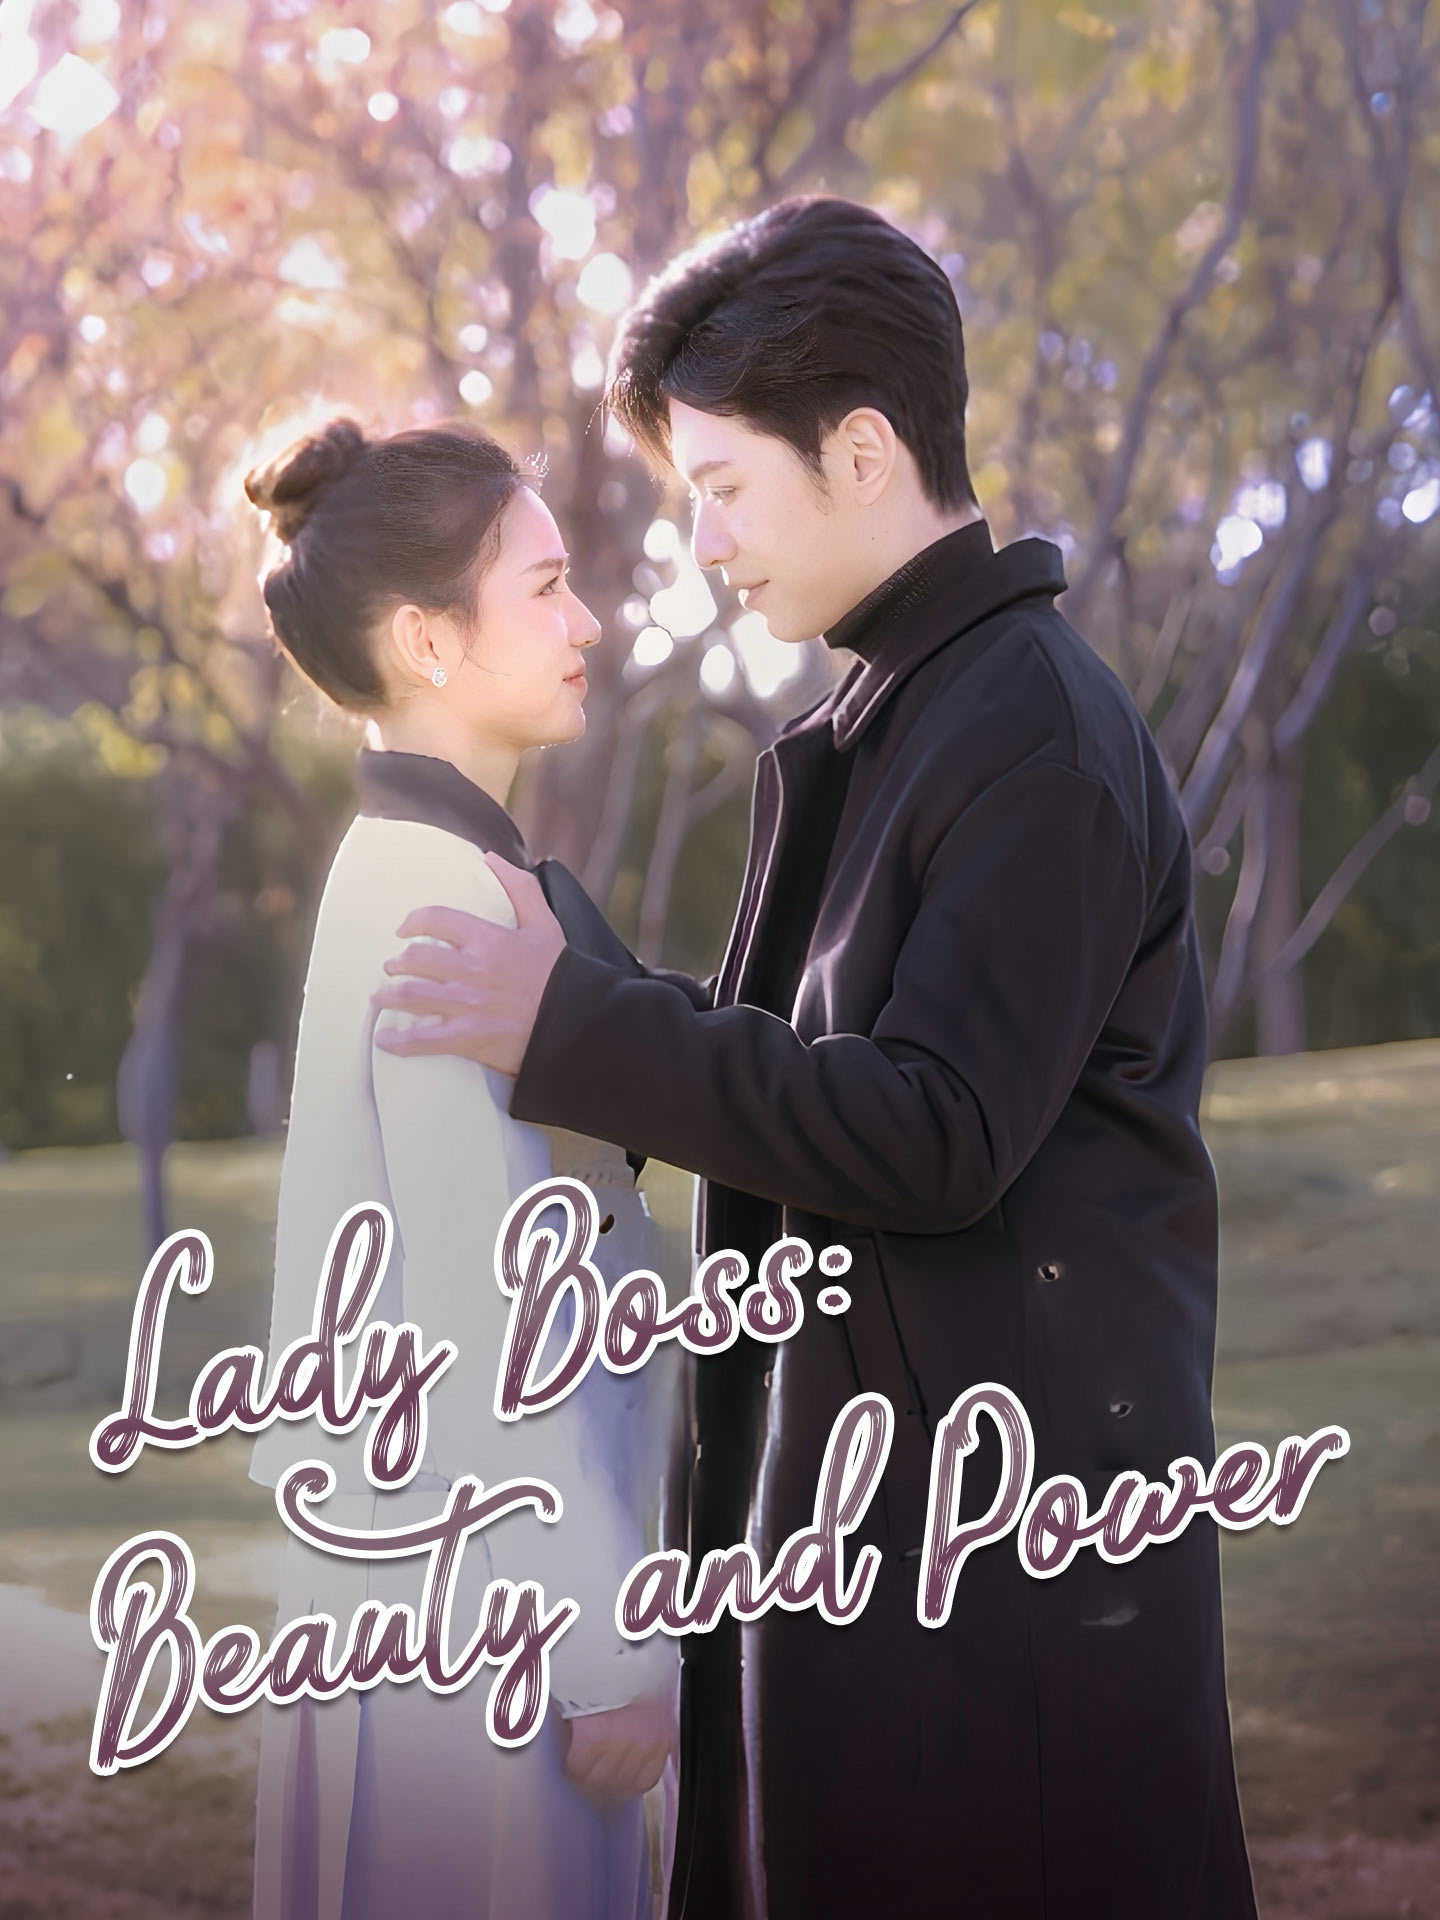 Lady Boss: Beauty and Power